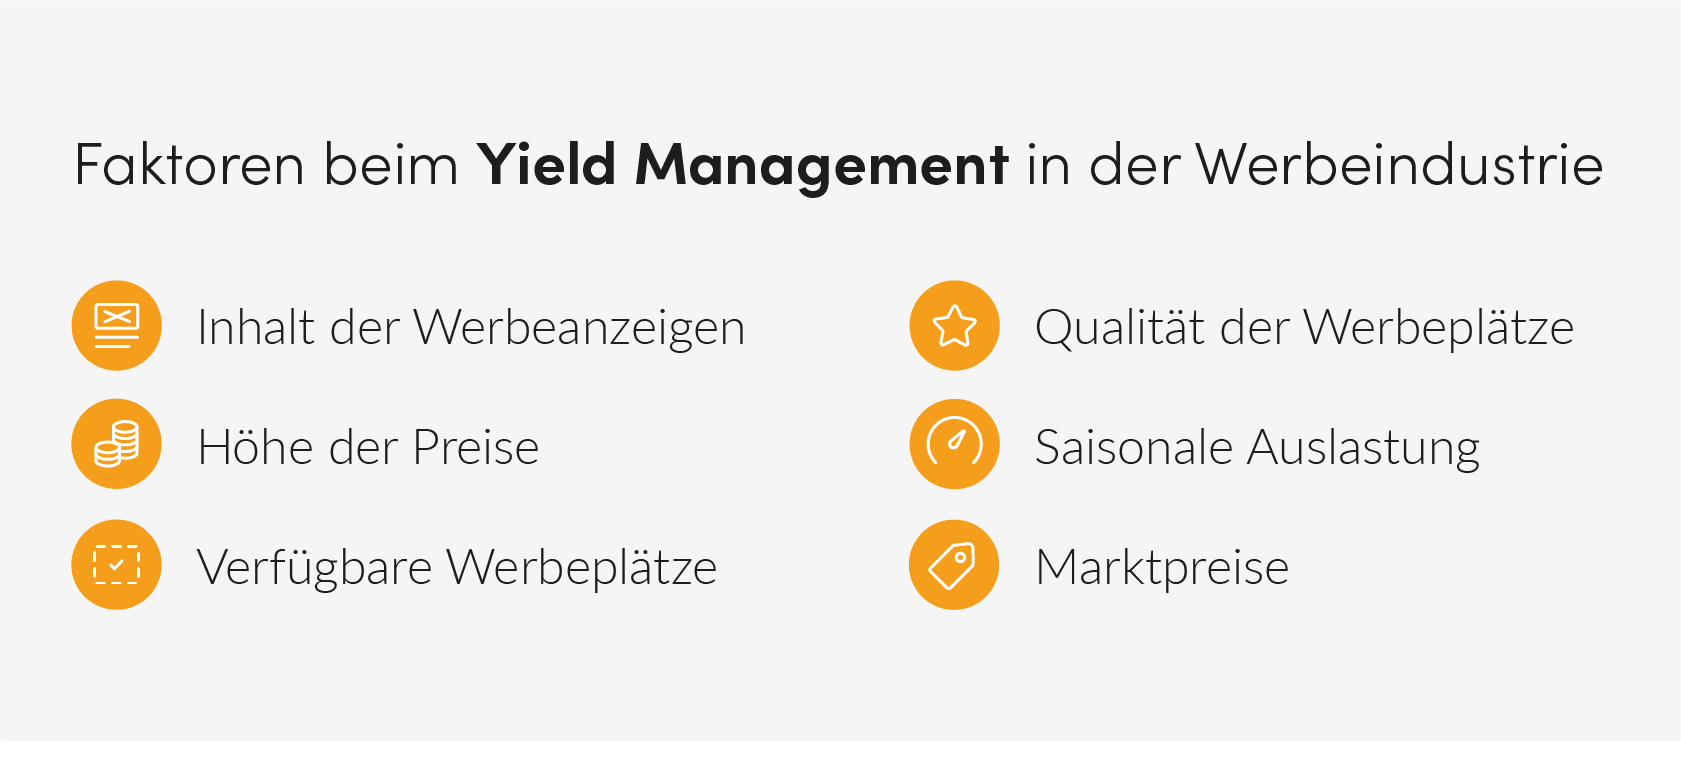 Yield Management Faktoren